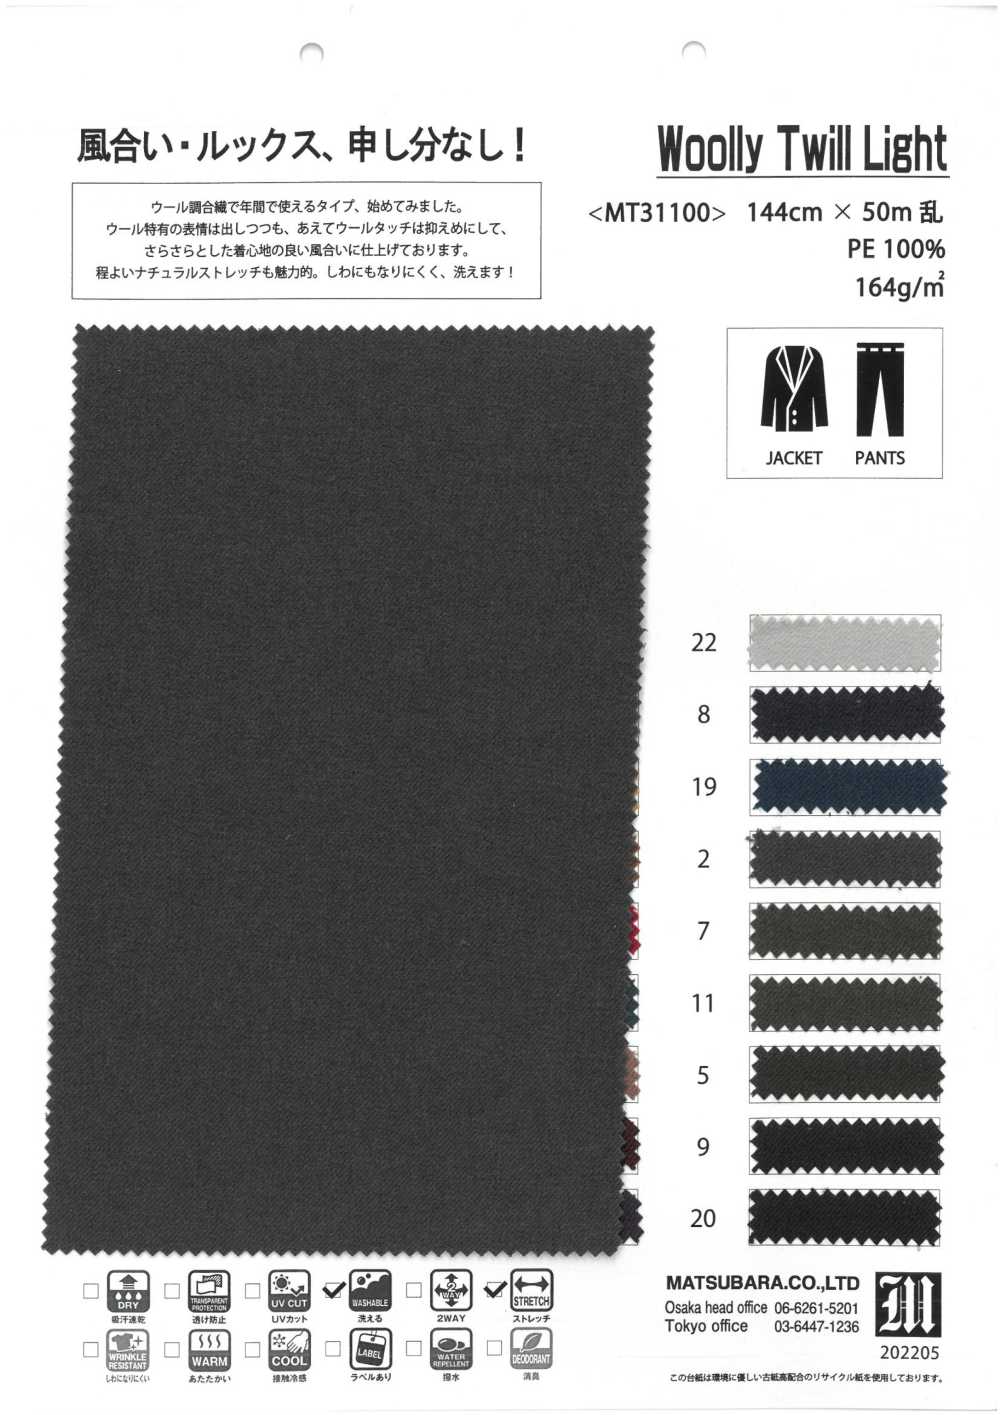 MT31100 Wookky Twill Light[Textile / Fabric] Matsubara